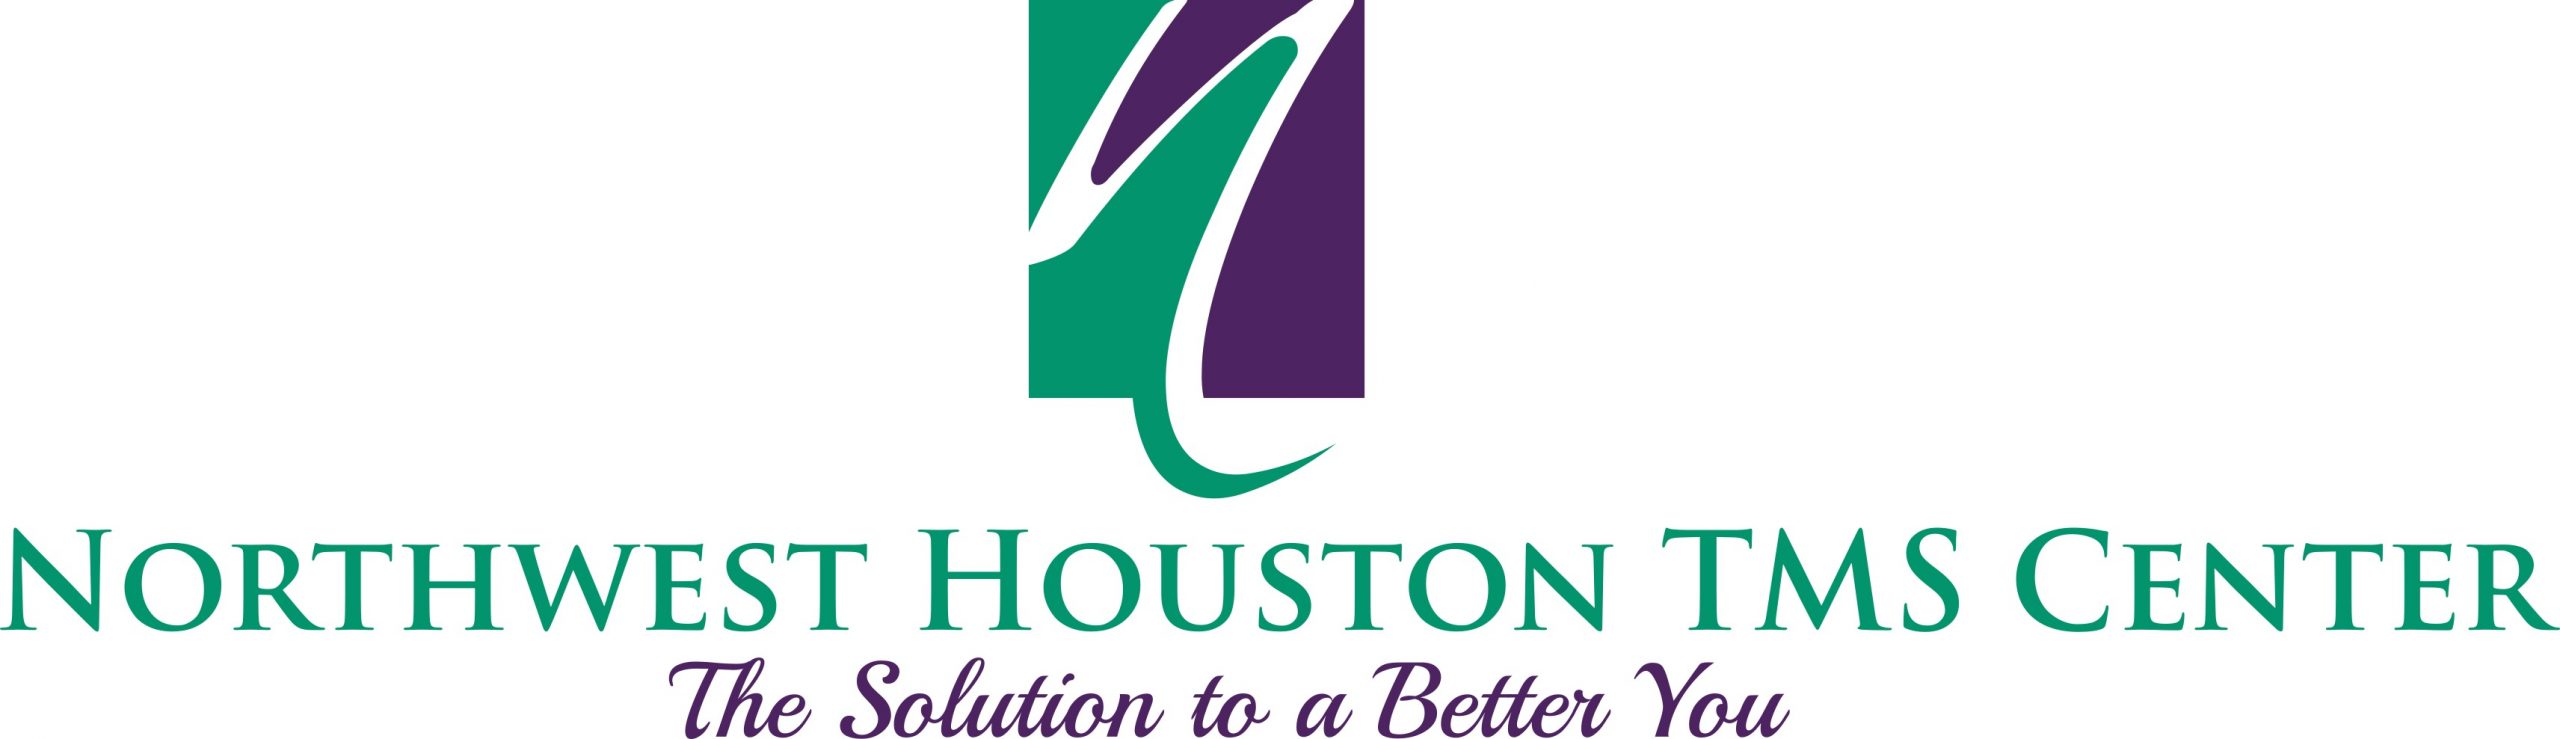 Northwest Houston TMS Center logo